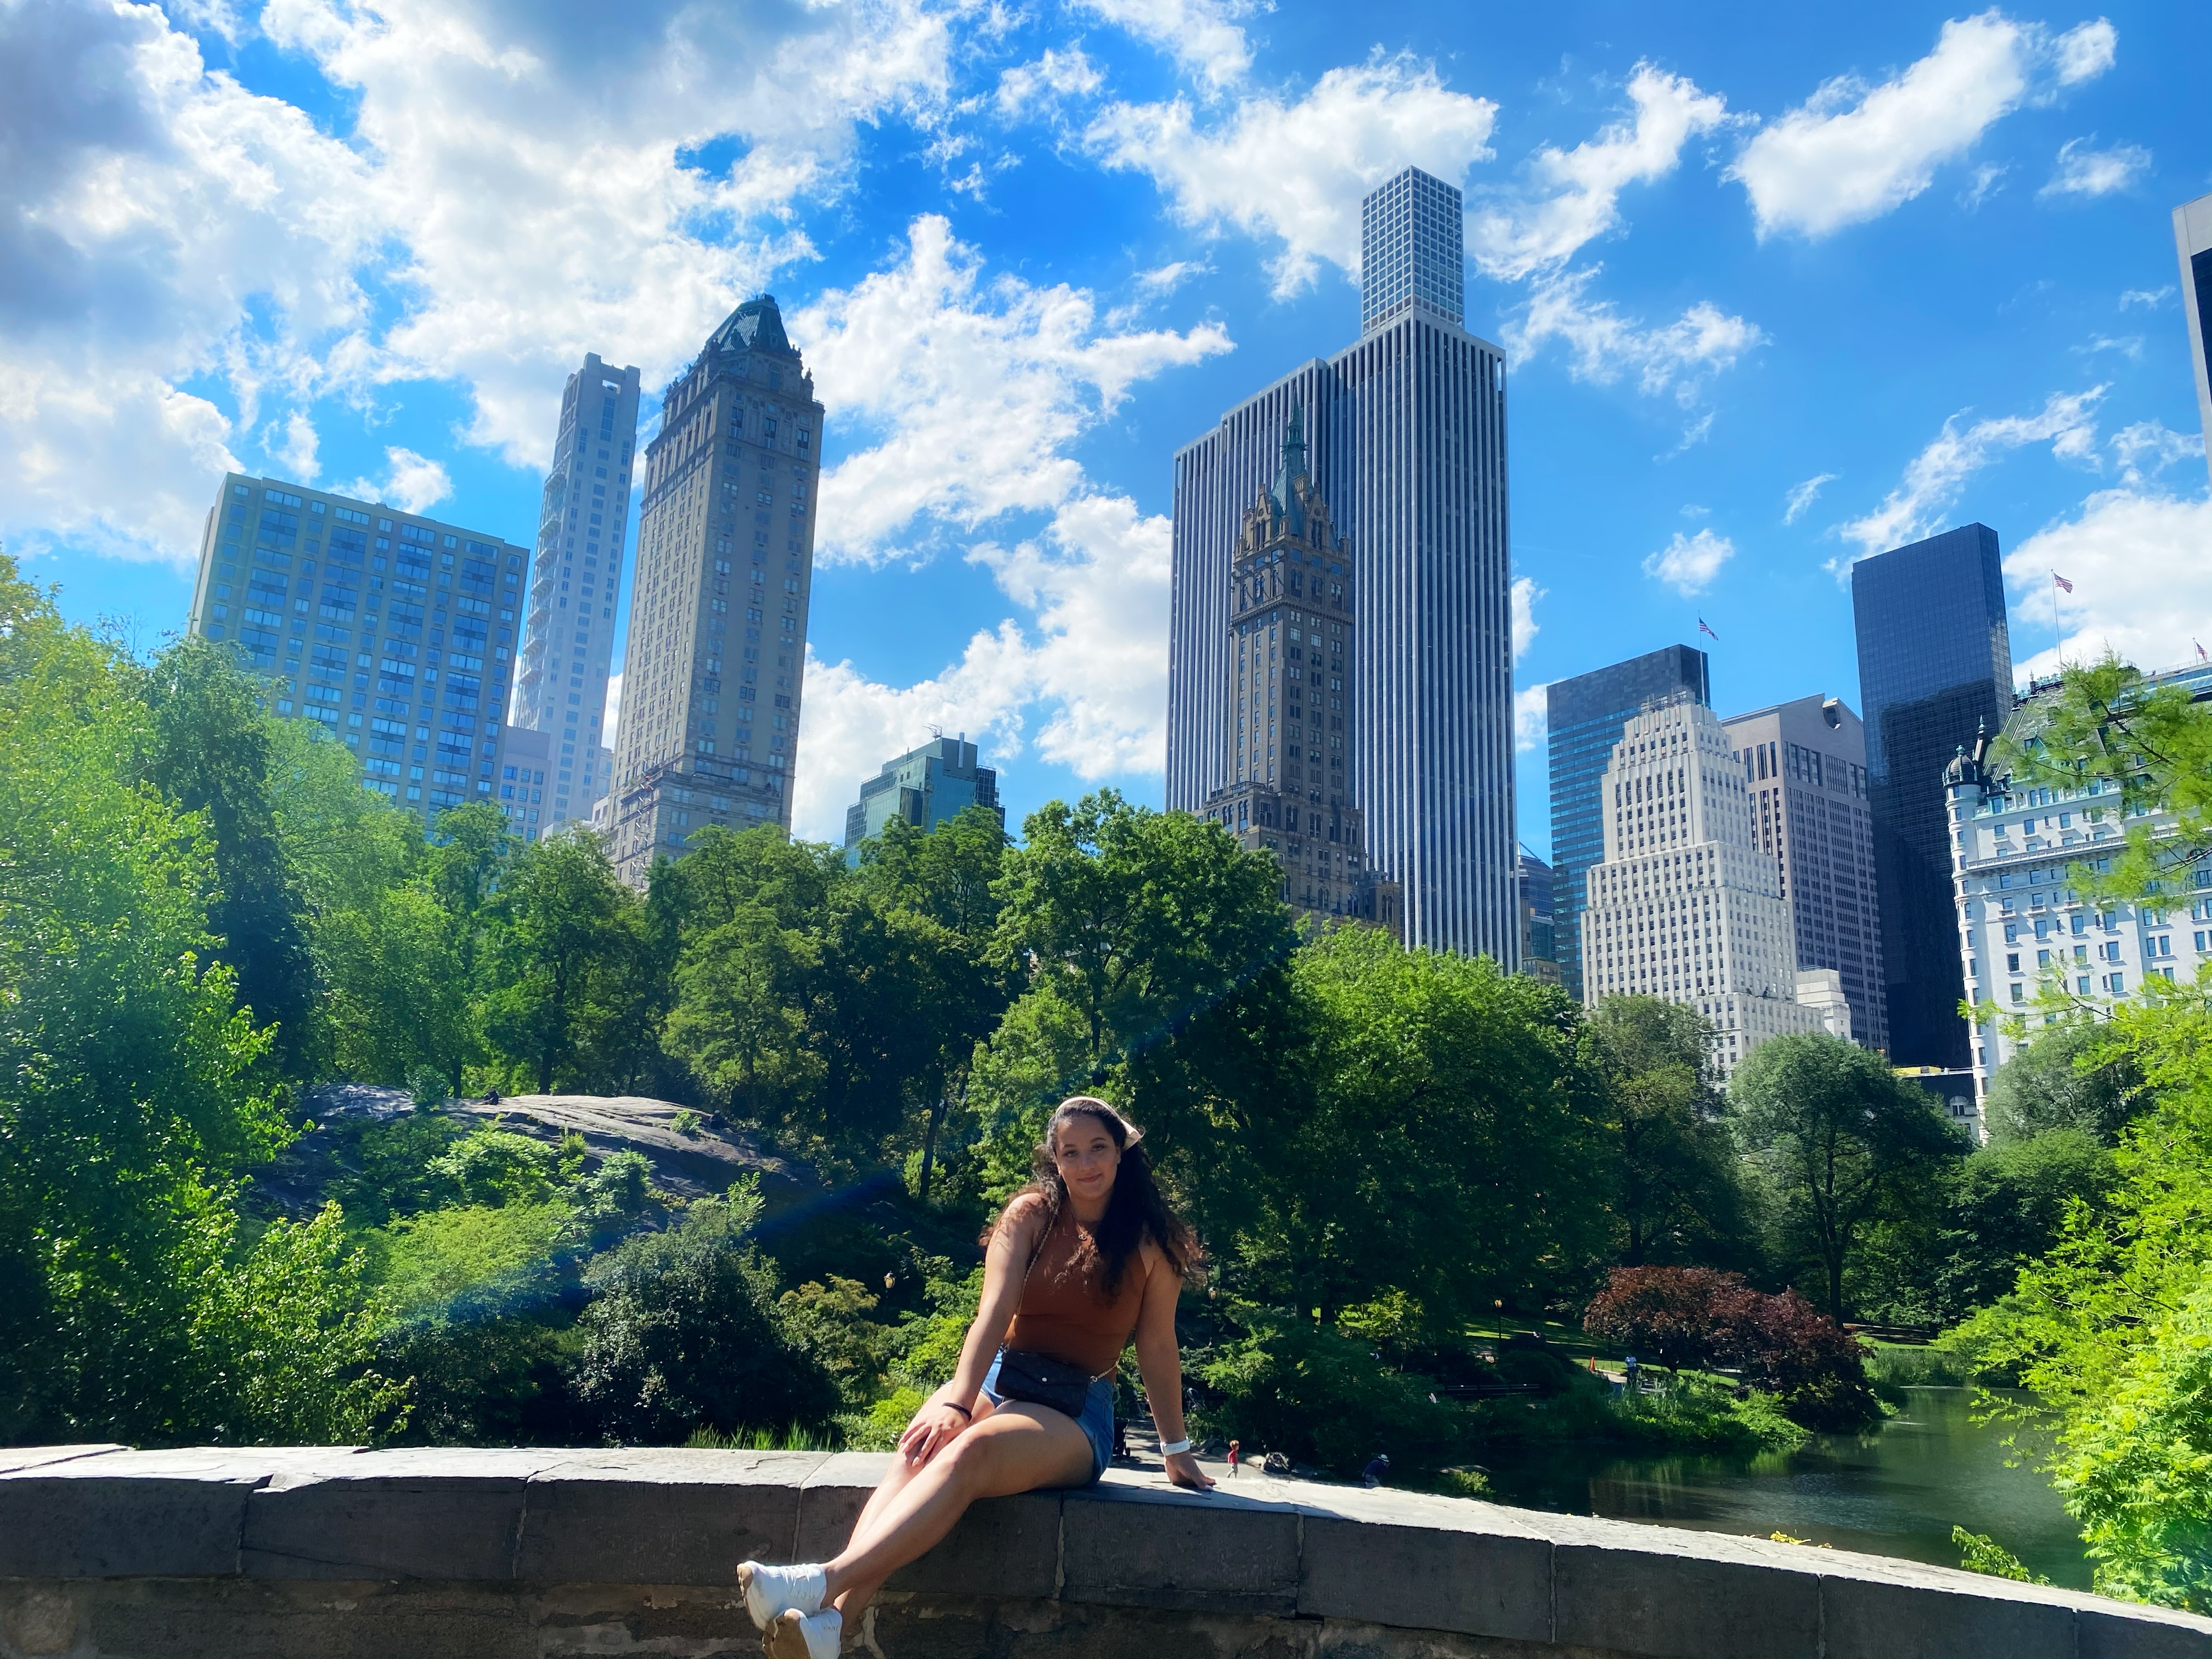 Amanda sitting on a bridge in Central Park, NY